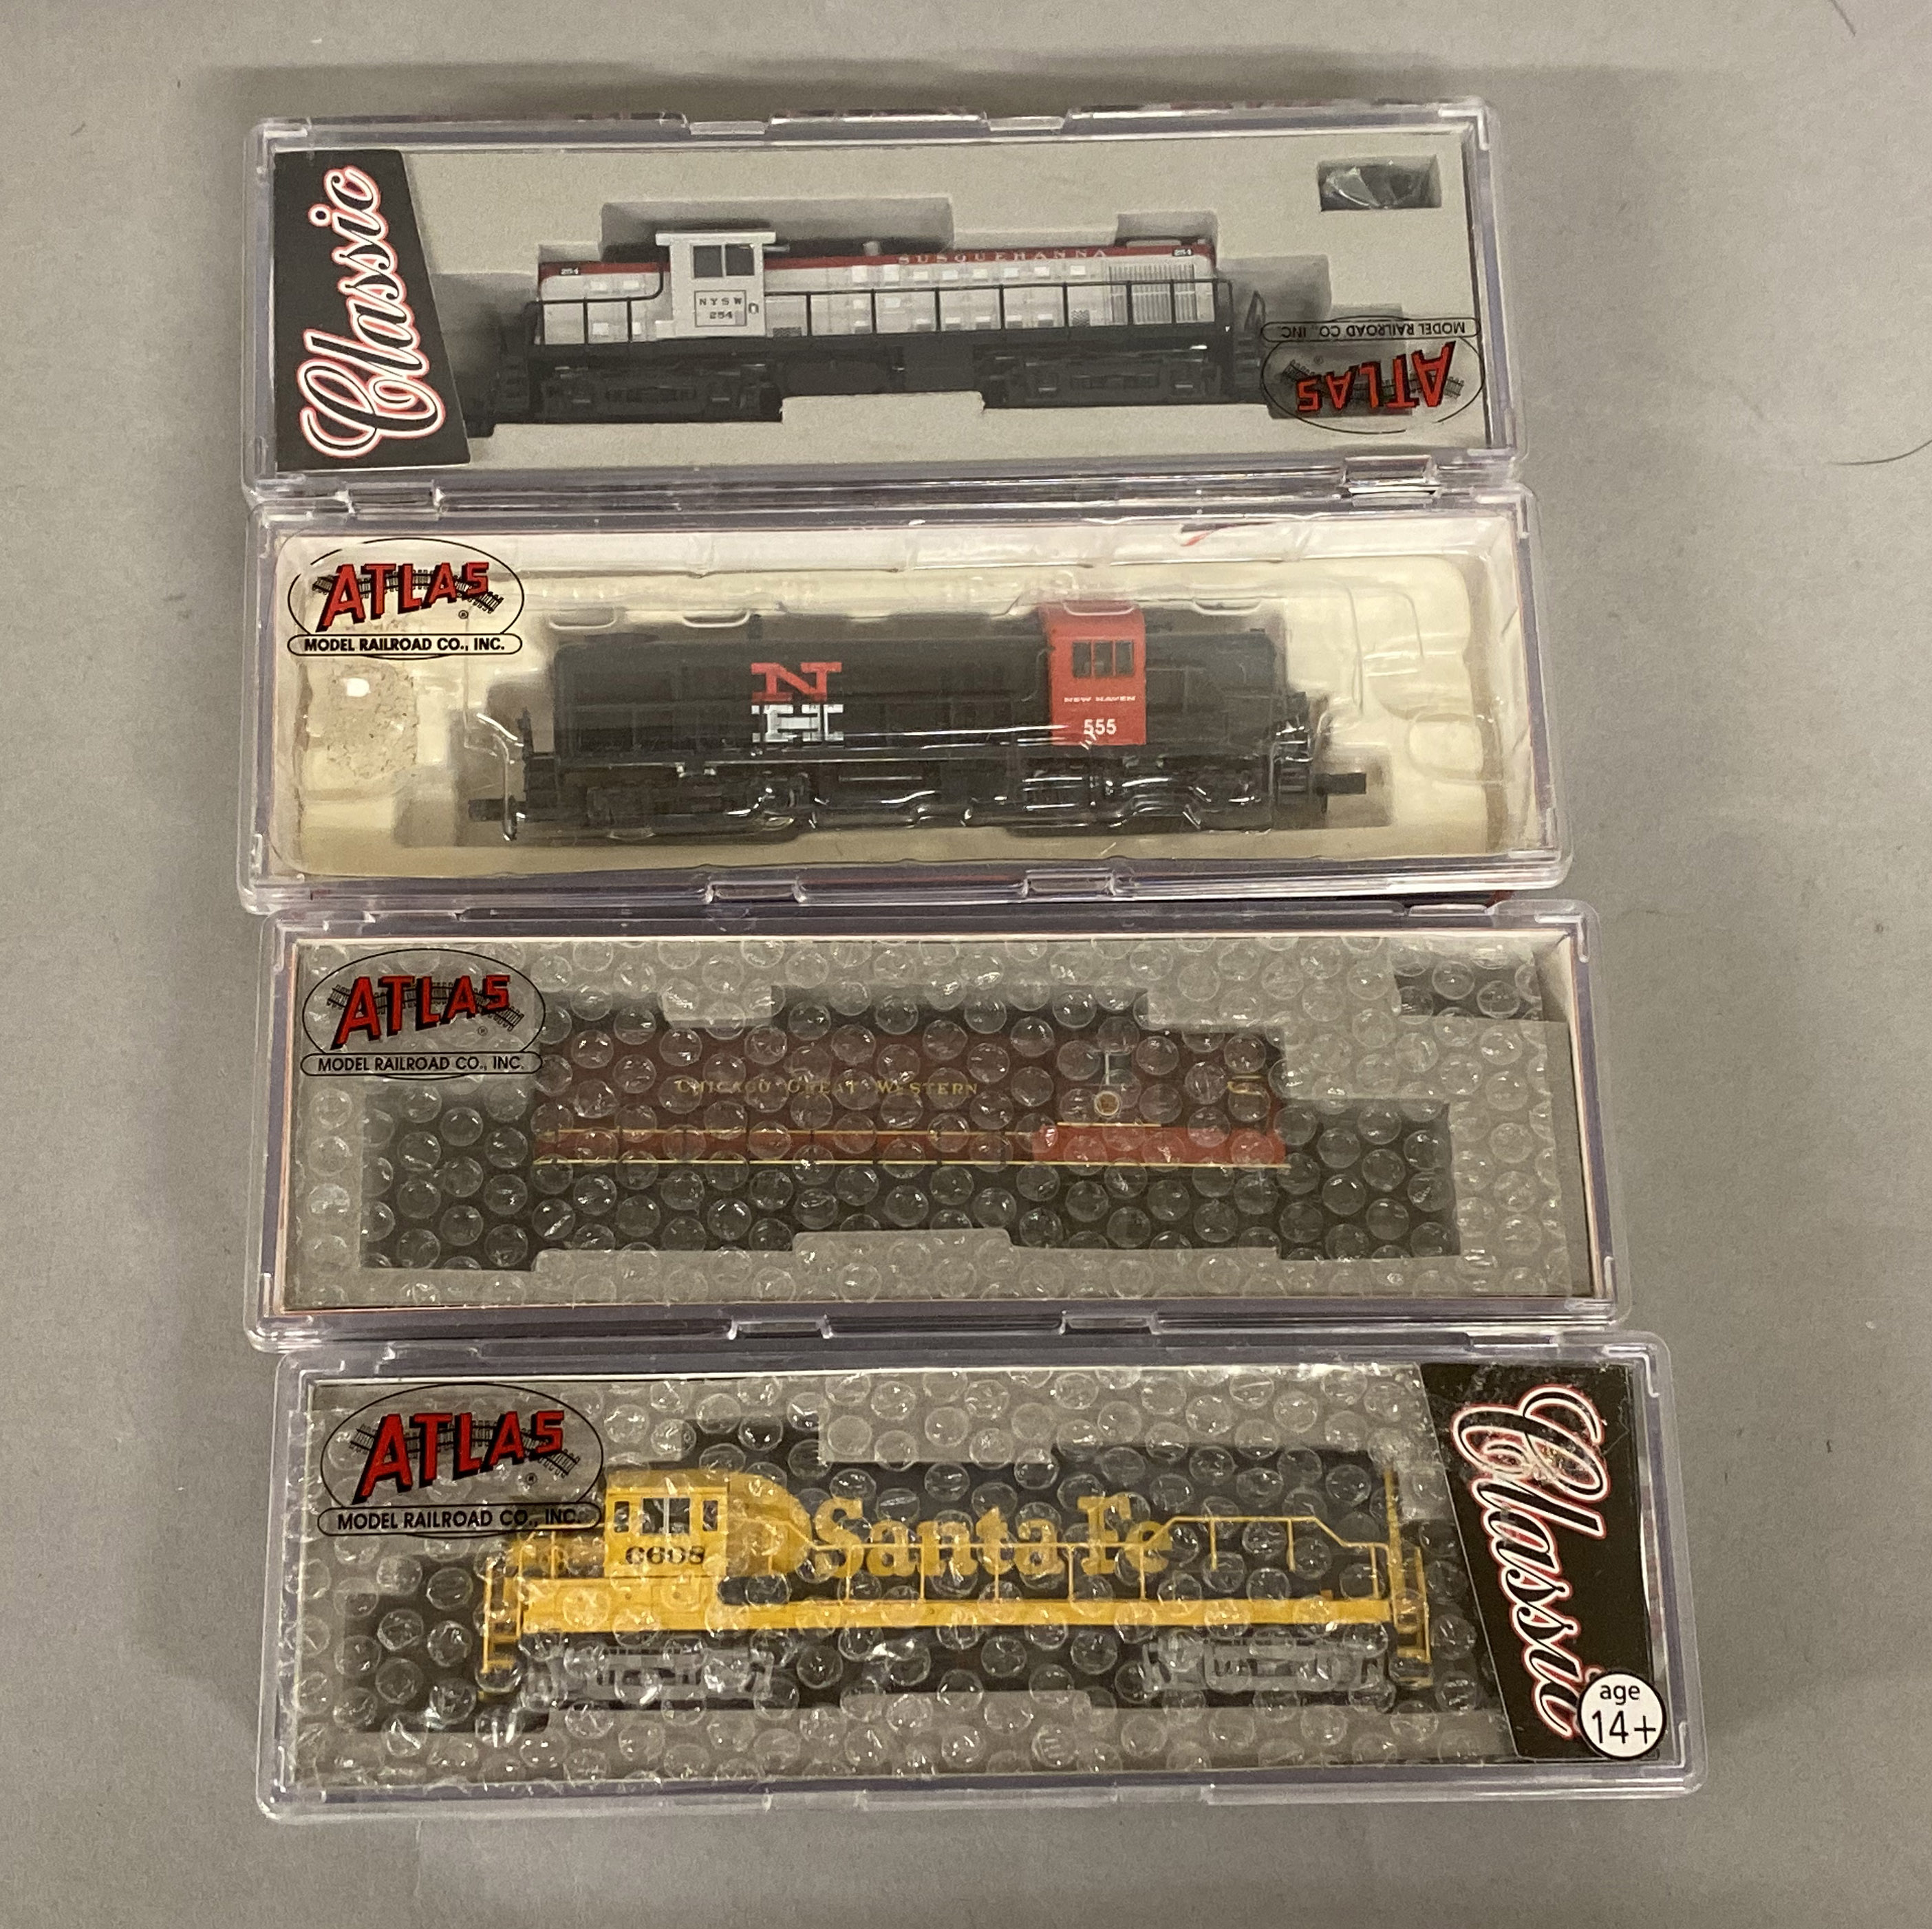 Ex-Shop Stock N gauge Atlas x4 Locomotives; #44028 #48074, #48616 and #44525 (4).